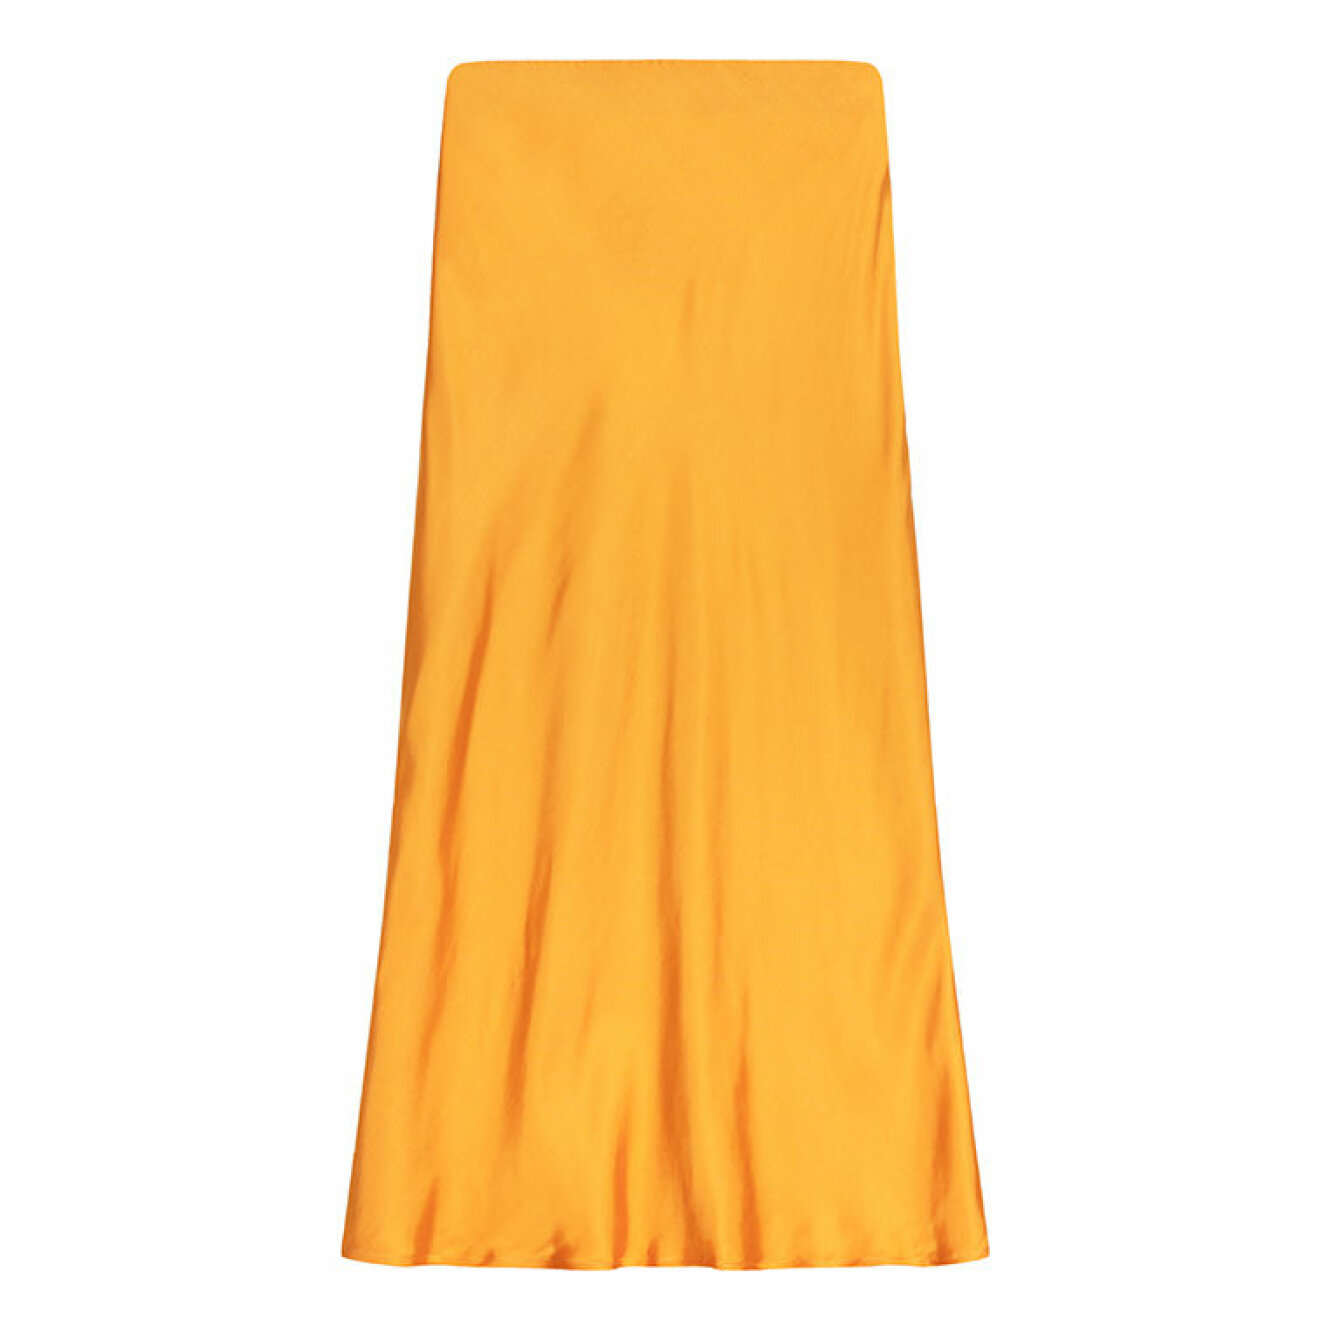 By Malina höst 2021 – gul kjol